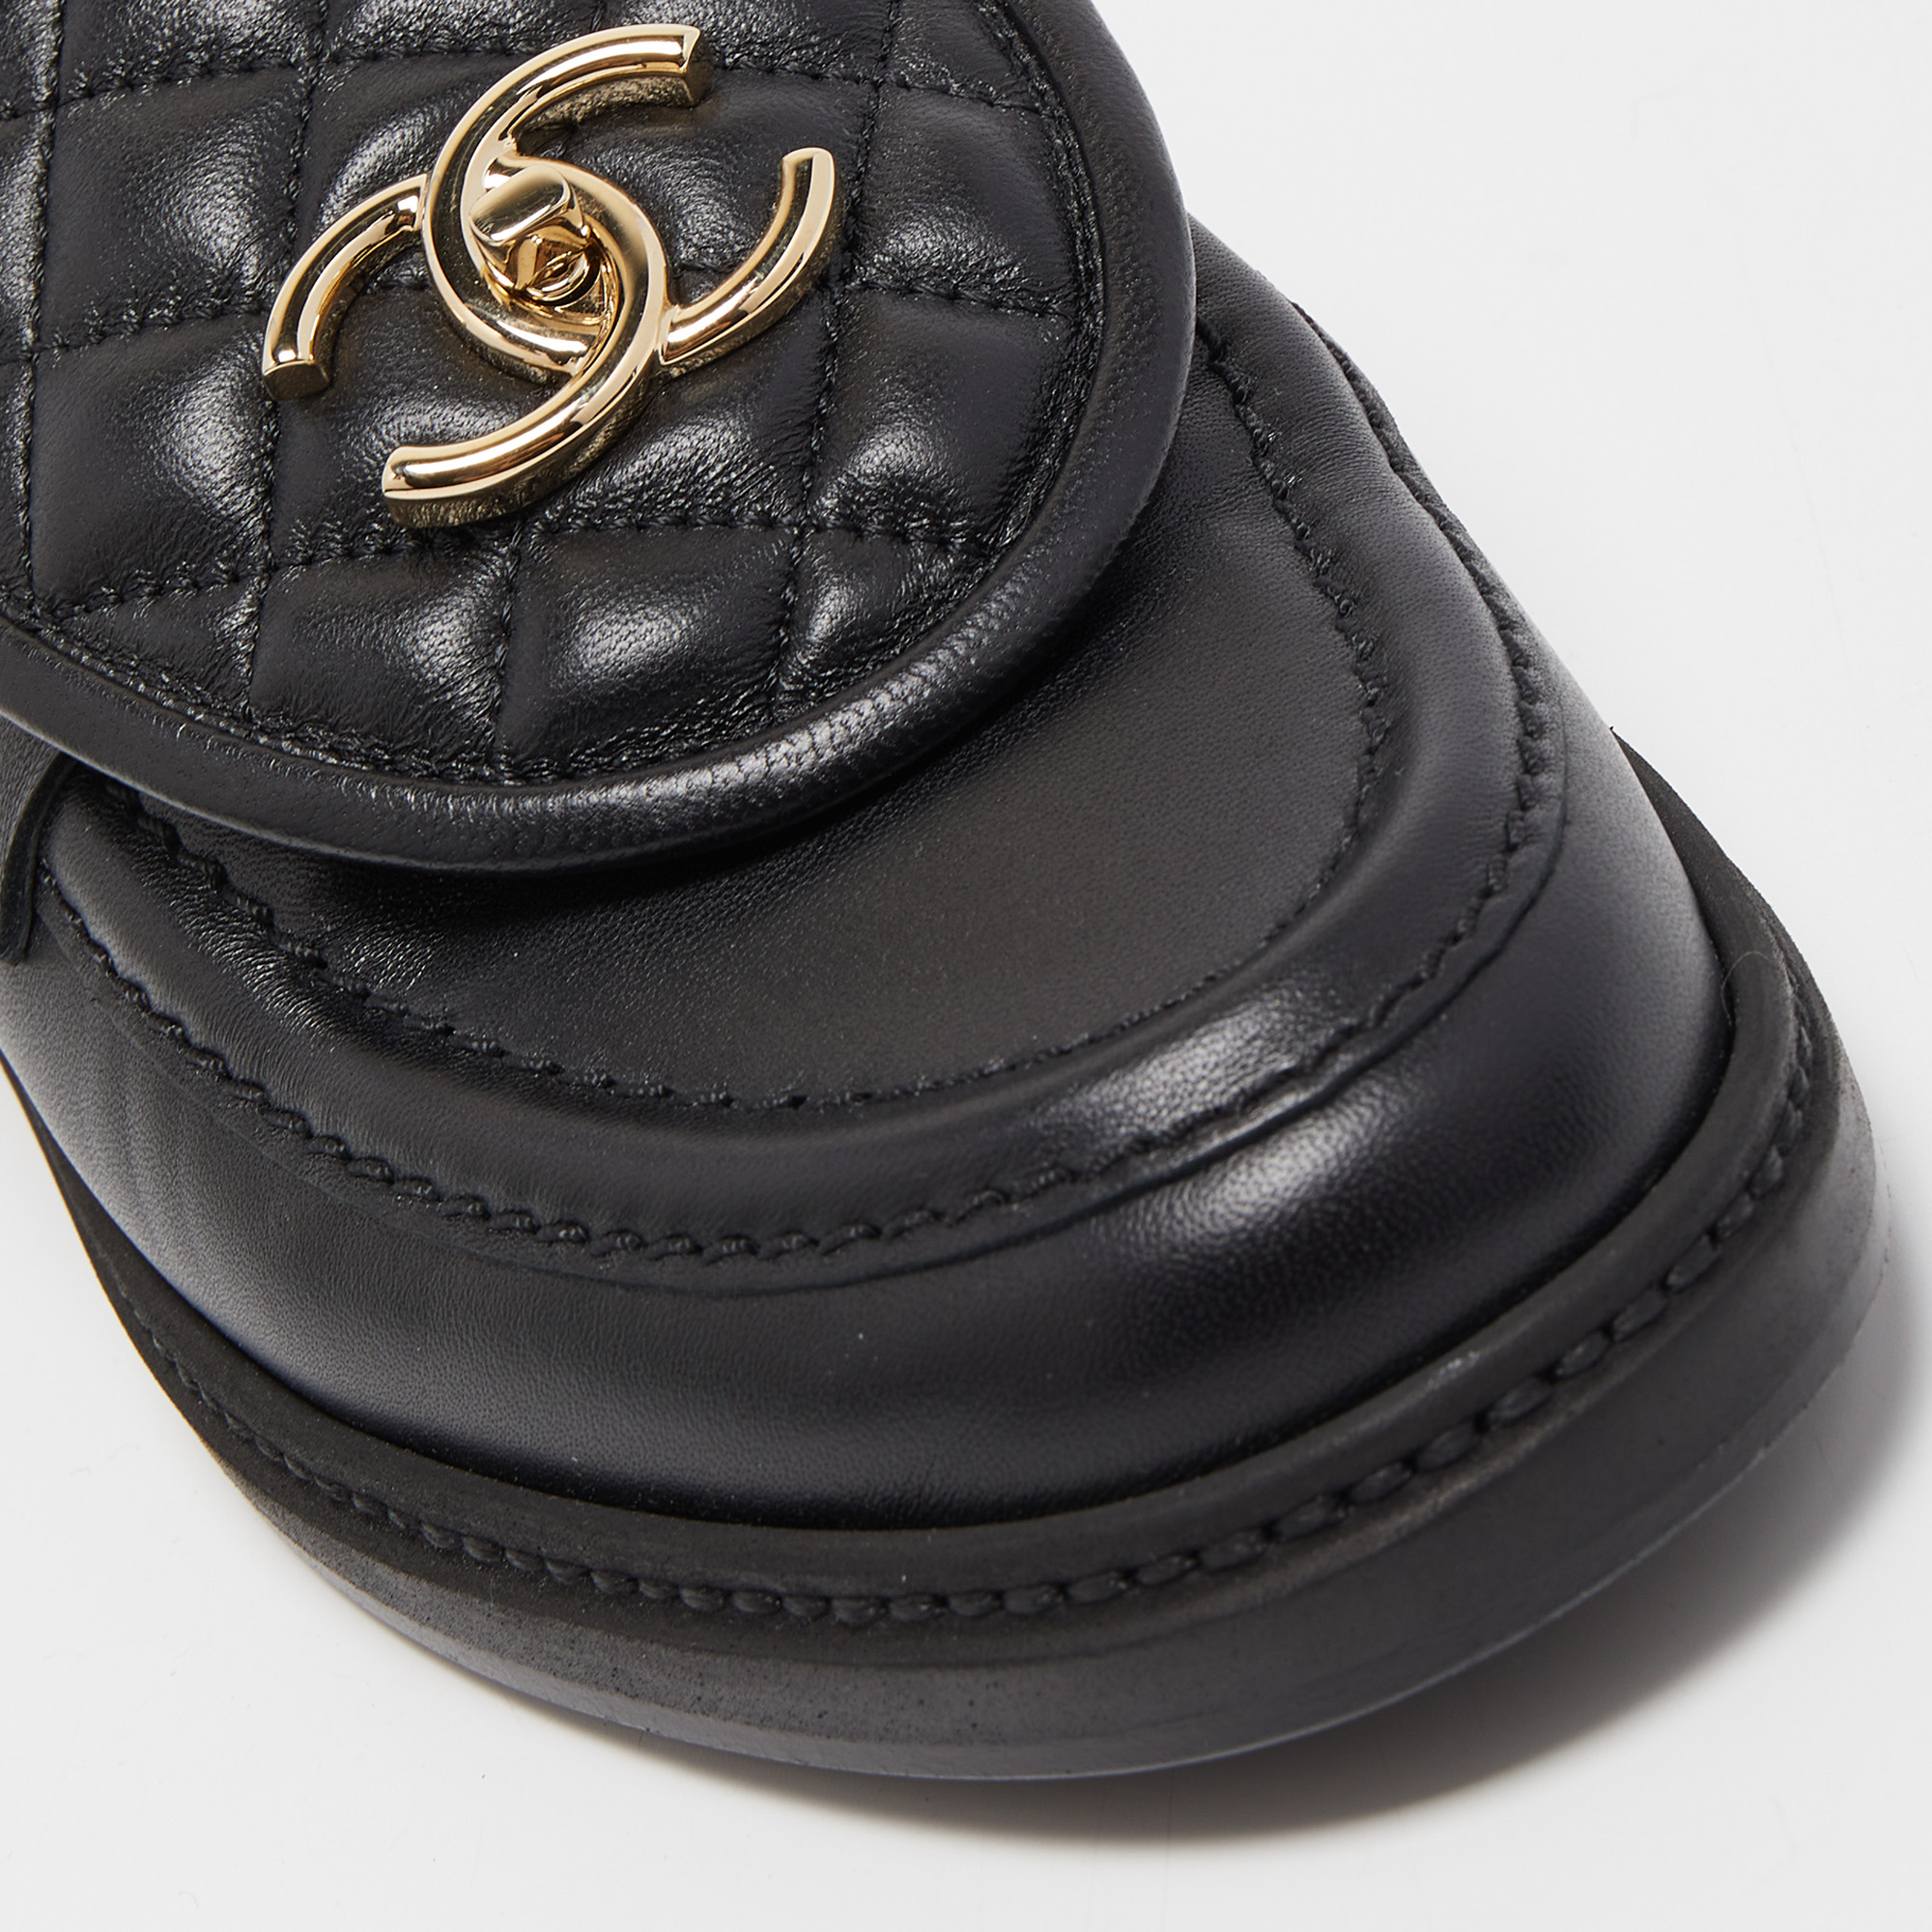 Chanel Black Leather Interlocking CC Logo Loafers Size 38.5 Chanel